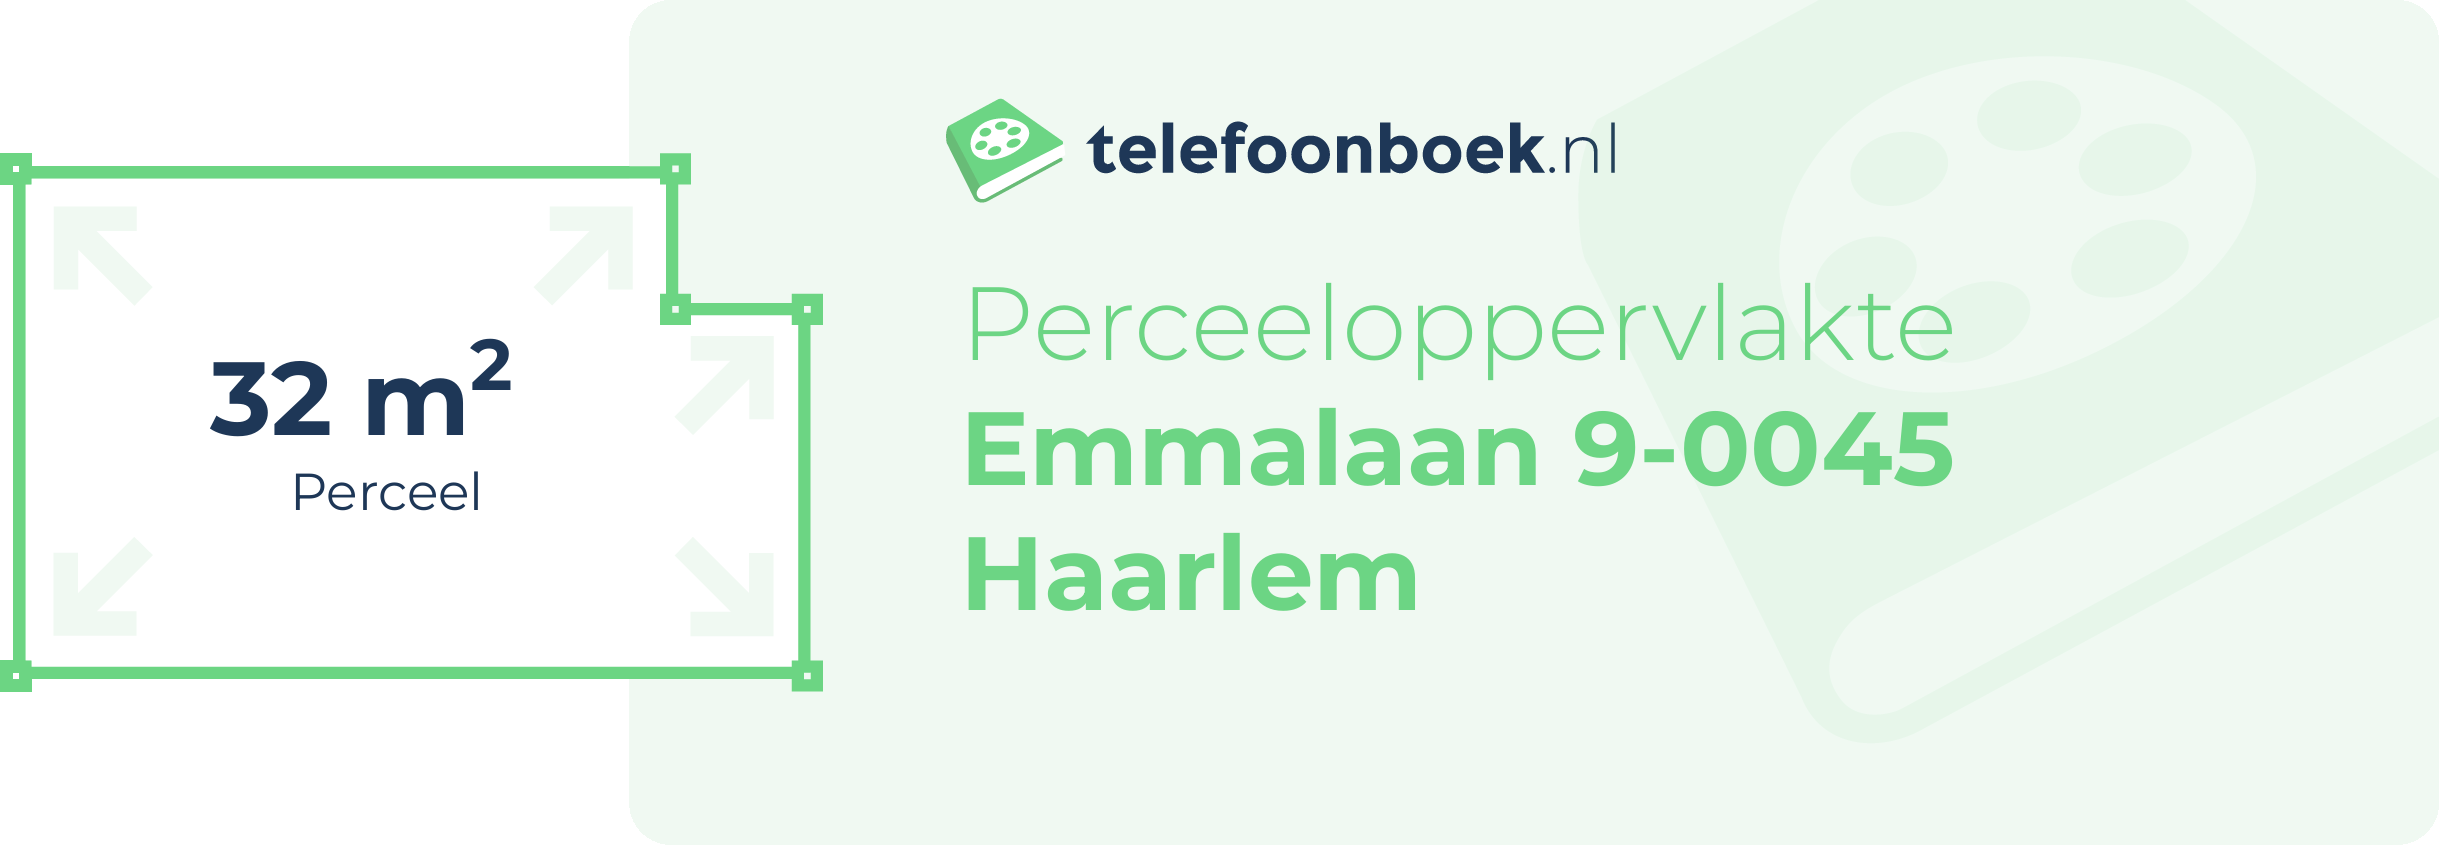 Perceeloppervlakte Emmalaan 9-0045 Haarlem